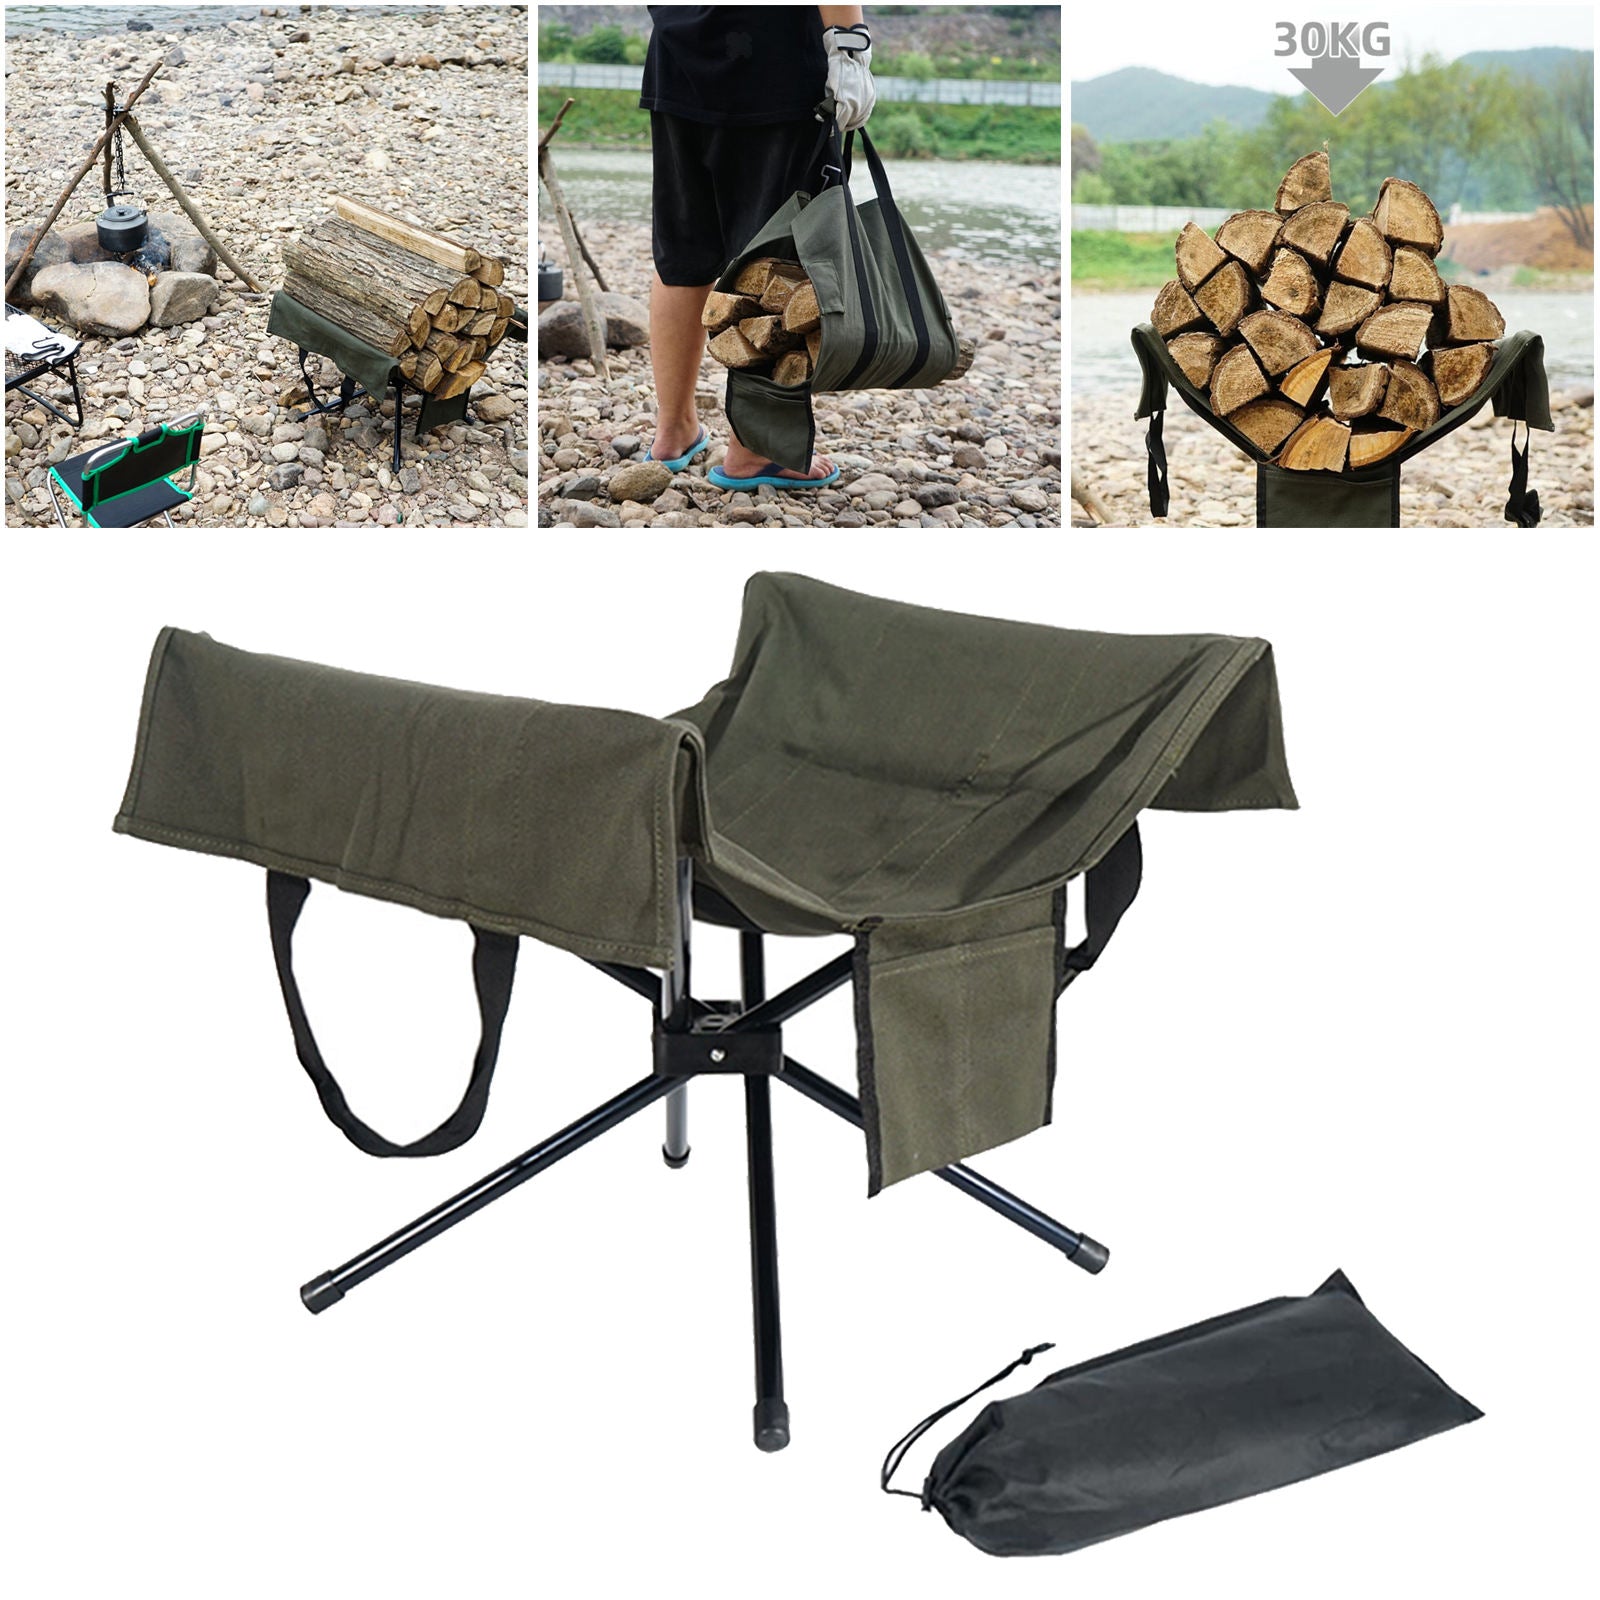 Firewood Log Carrier Tote Bag Handbag w/ Rack for Camping Picnic BBQ Outdoor